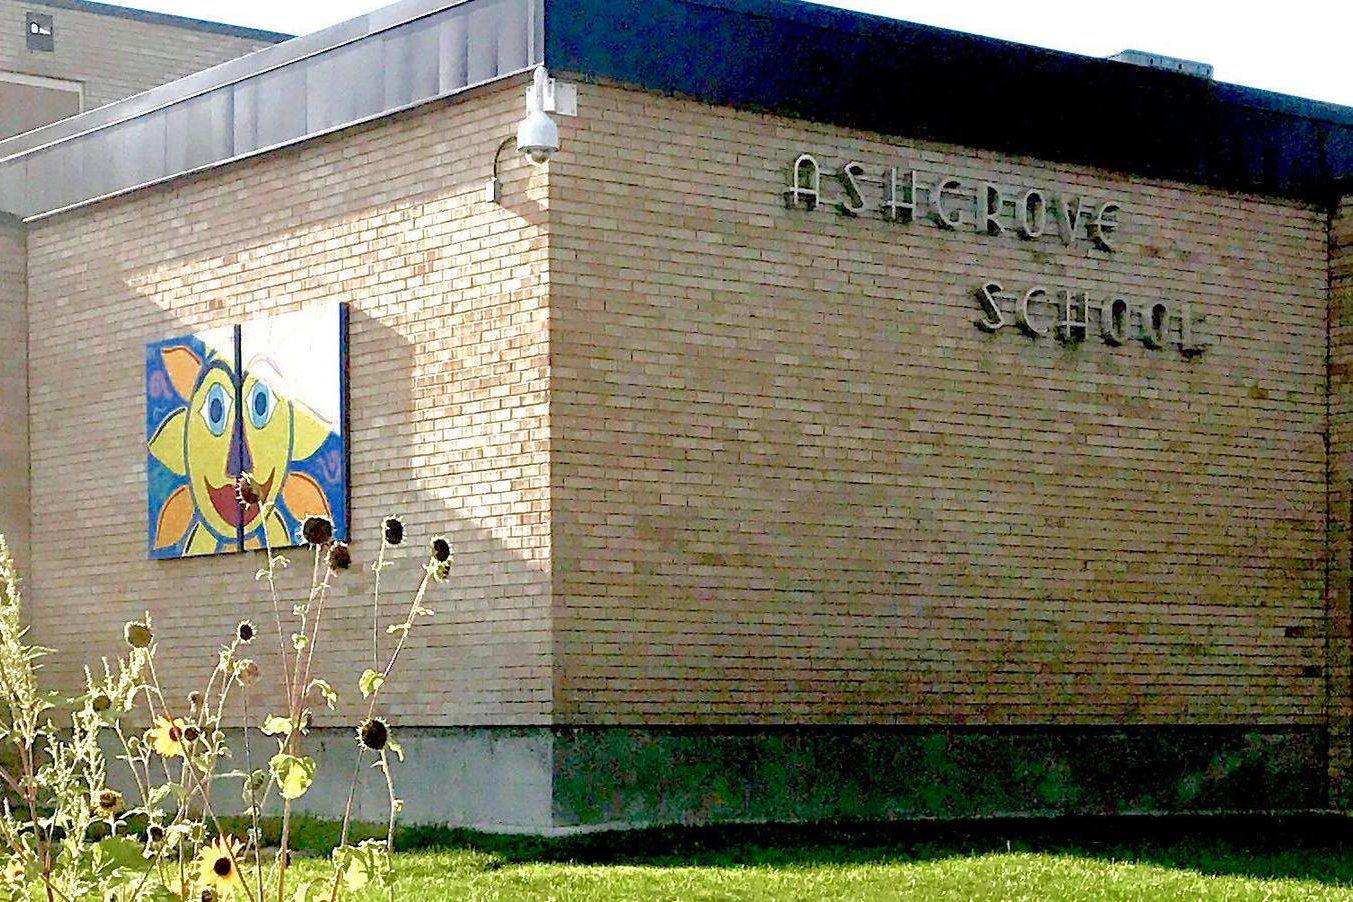 Ashgrove Elementary